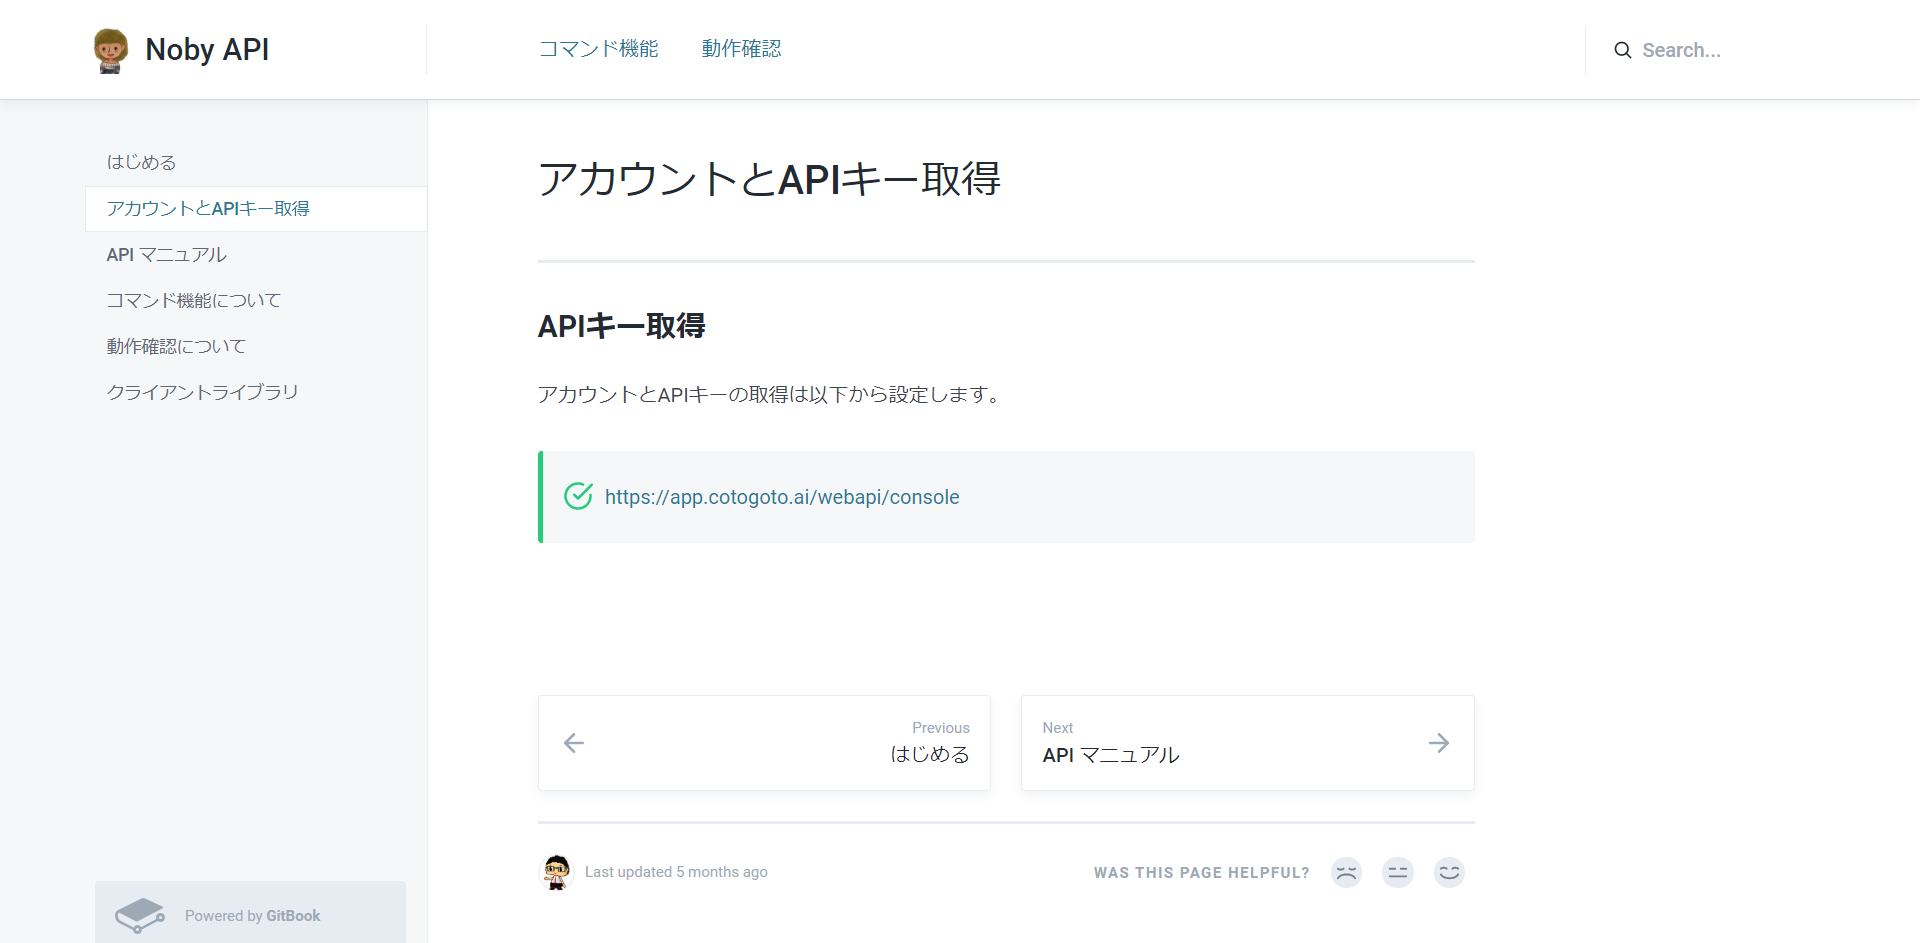 FireShot Capture 041 - アカウントとAPIキー取得 - Noby API - webapi.cotogoto.ai.png